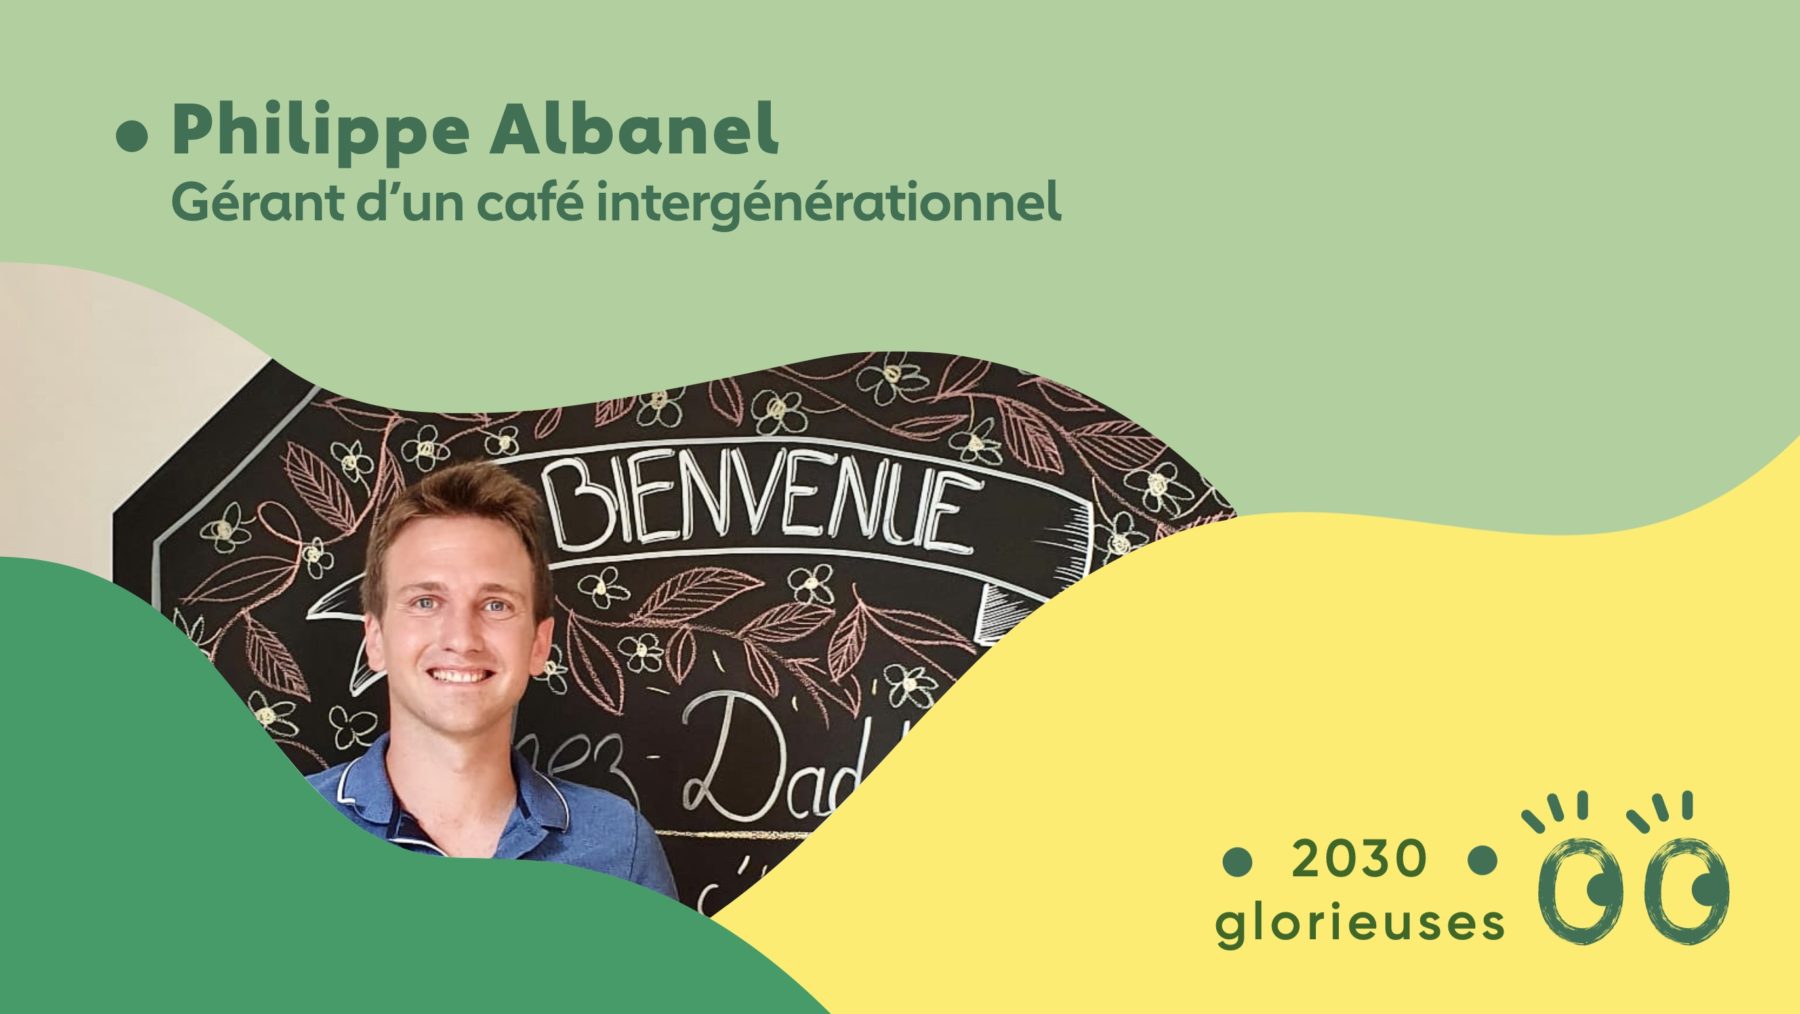 2030 Glorieuses #44 : Philippe Albanel